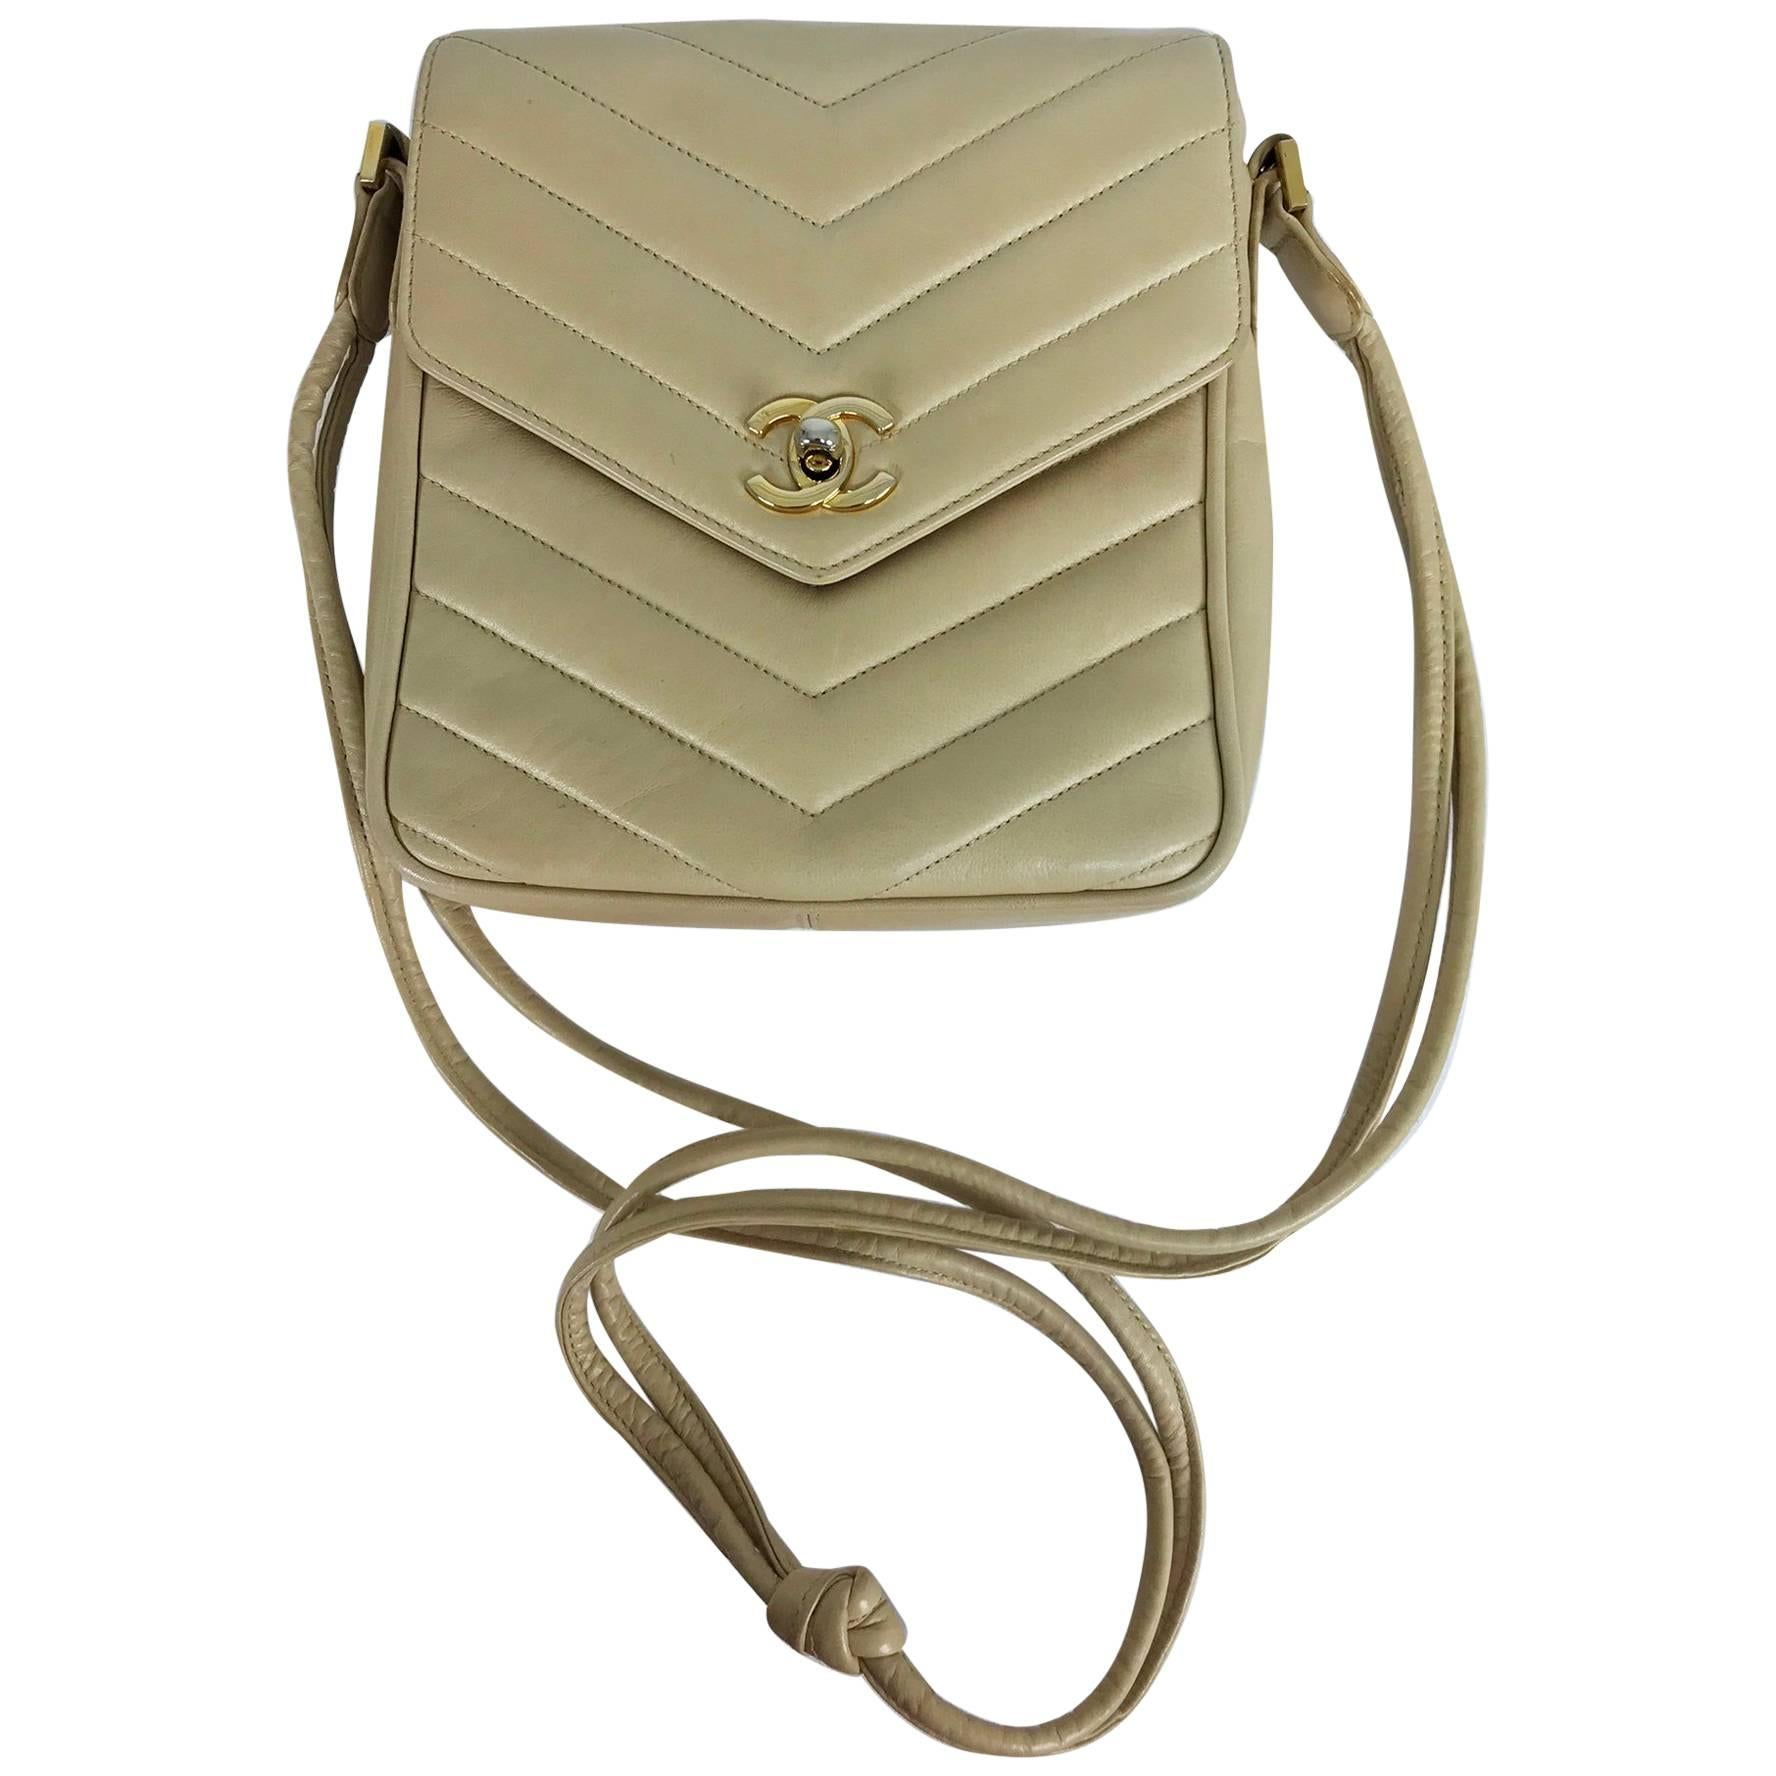 Chanel beige chevron leather cross body camera handbag 1980s